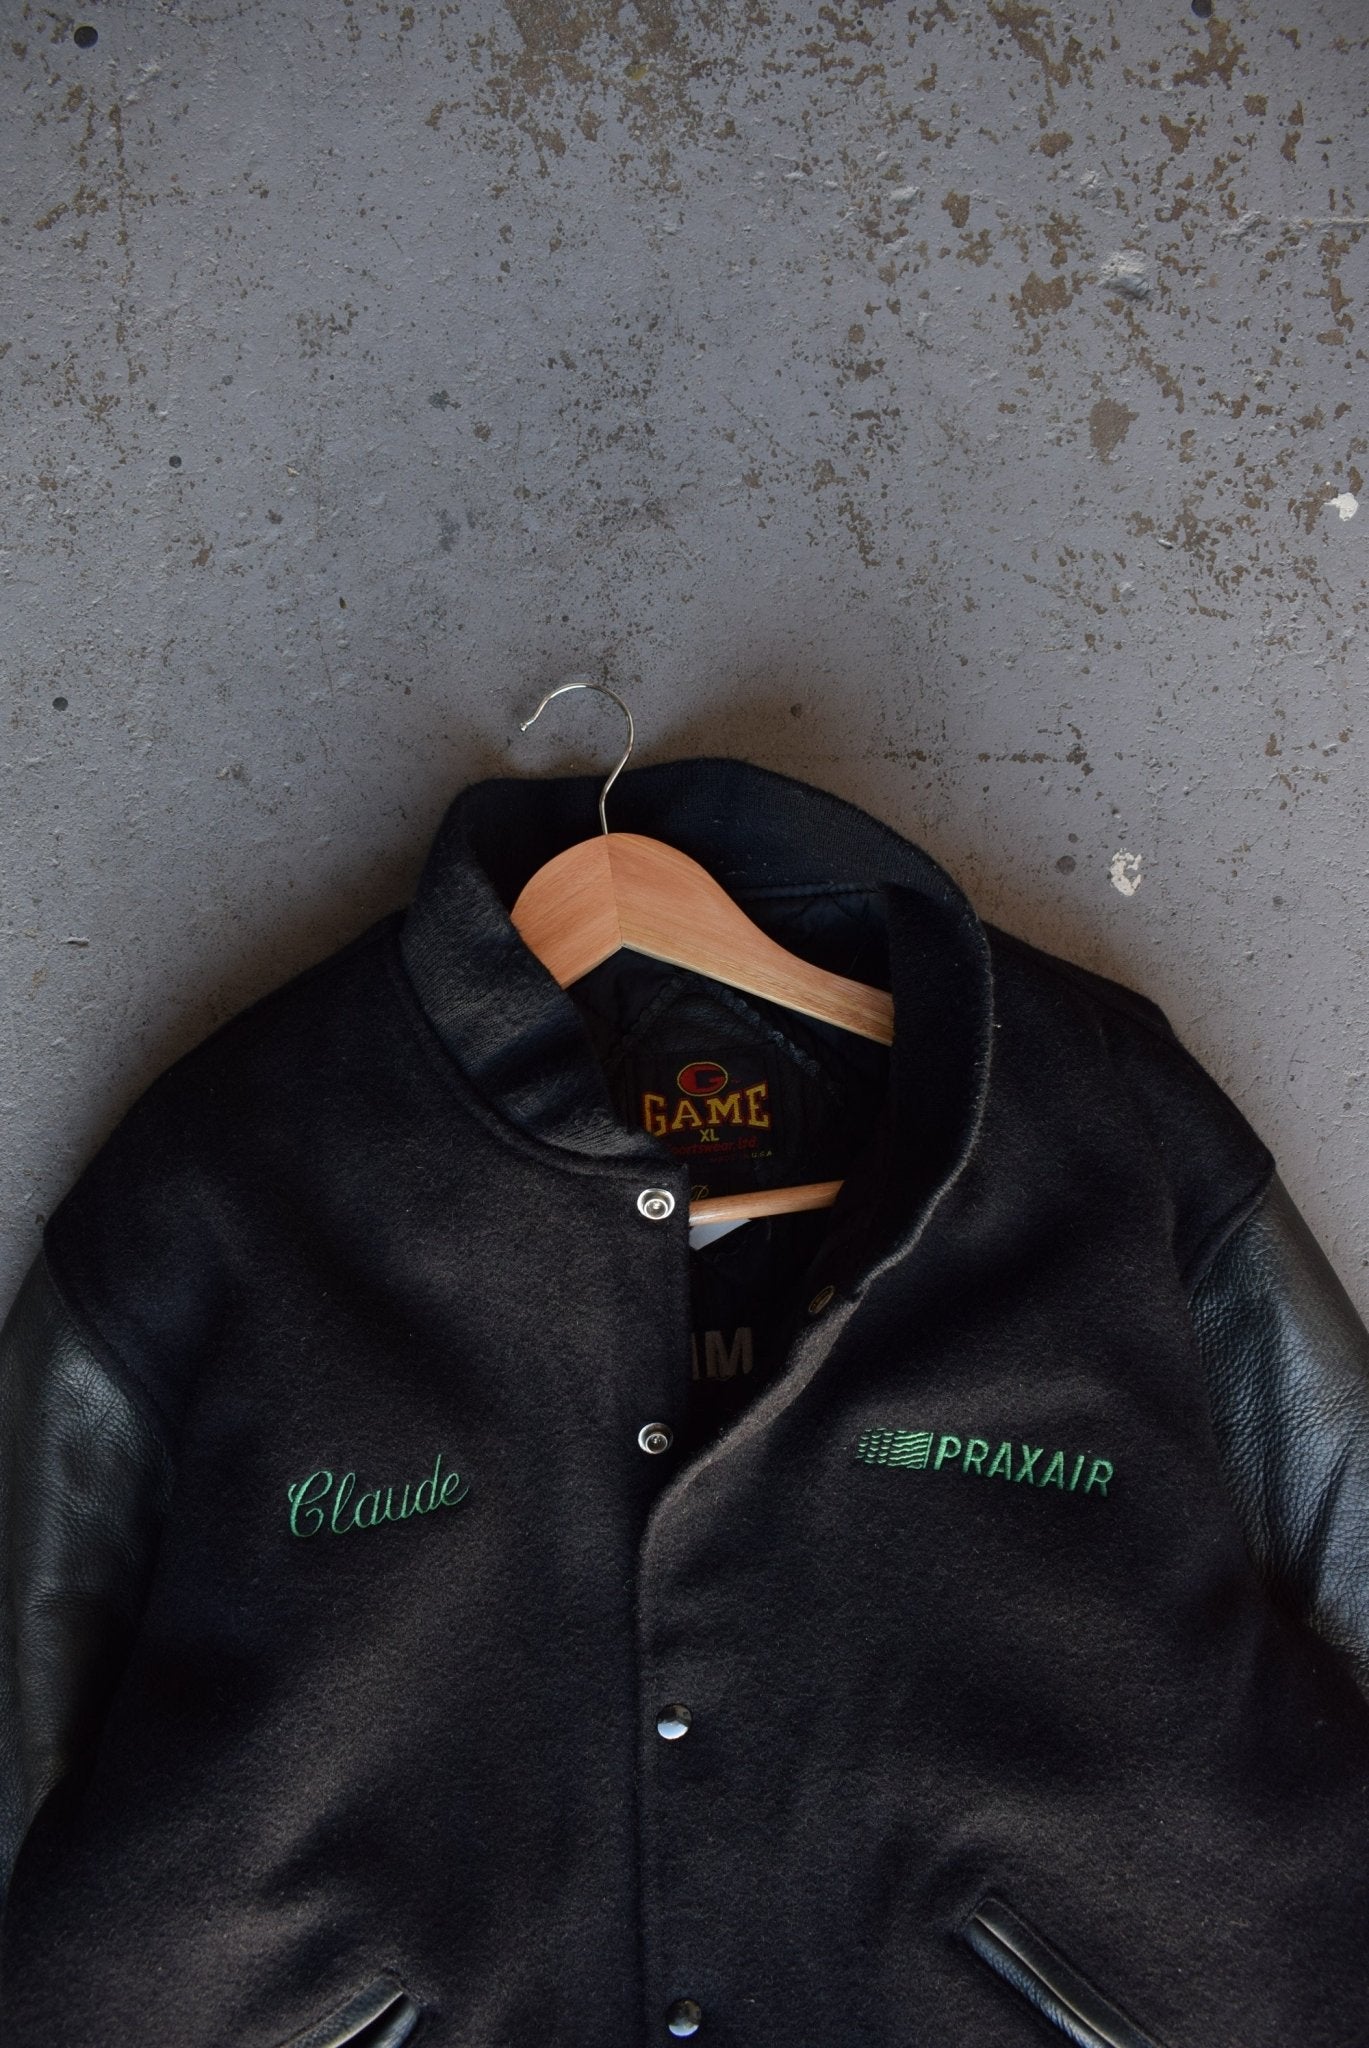 Vintage 90s Praxair Million Mile Team Varsity Jacket (XL) - Retrospective Store